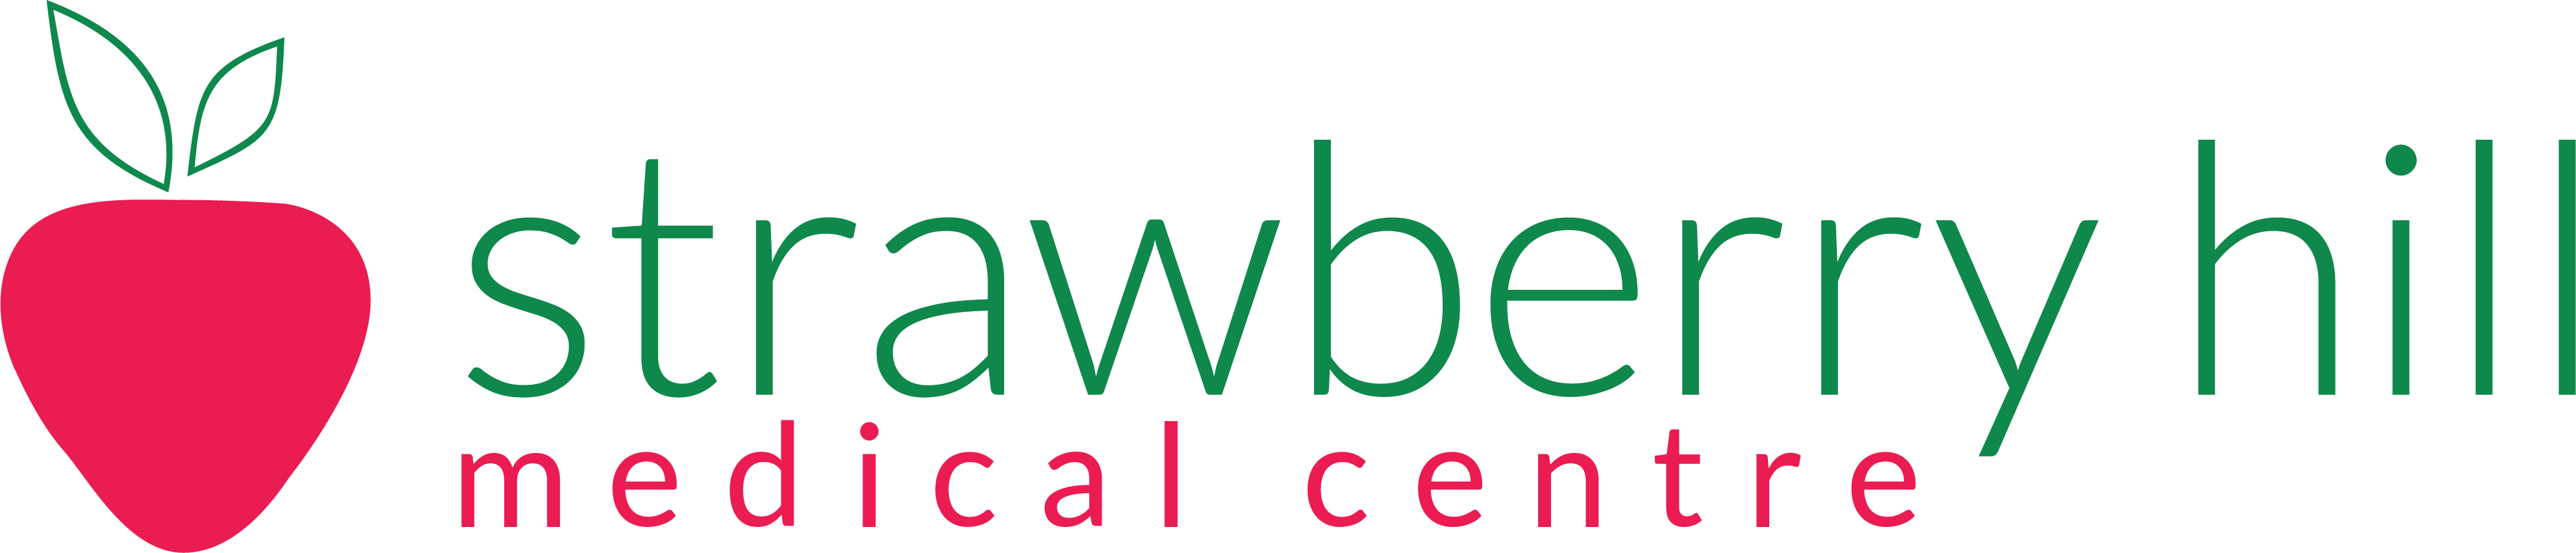 Strawberry Hill Medical Cenre logo